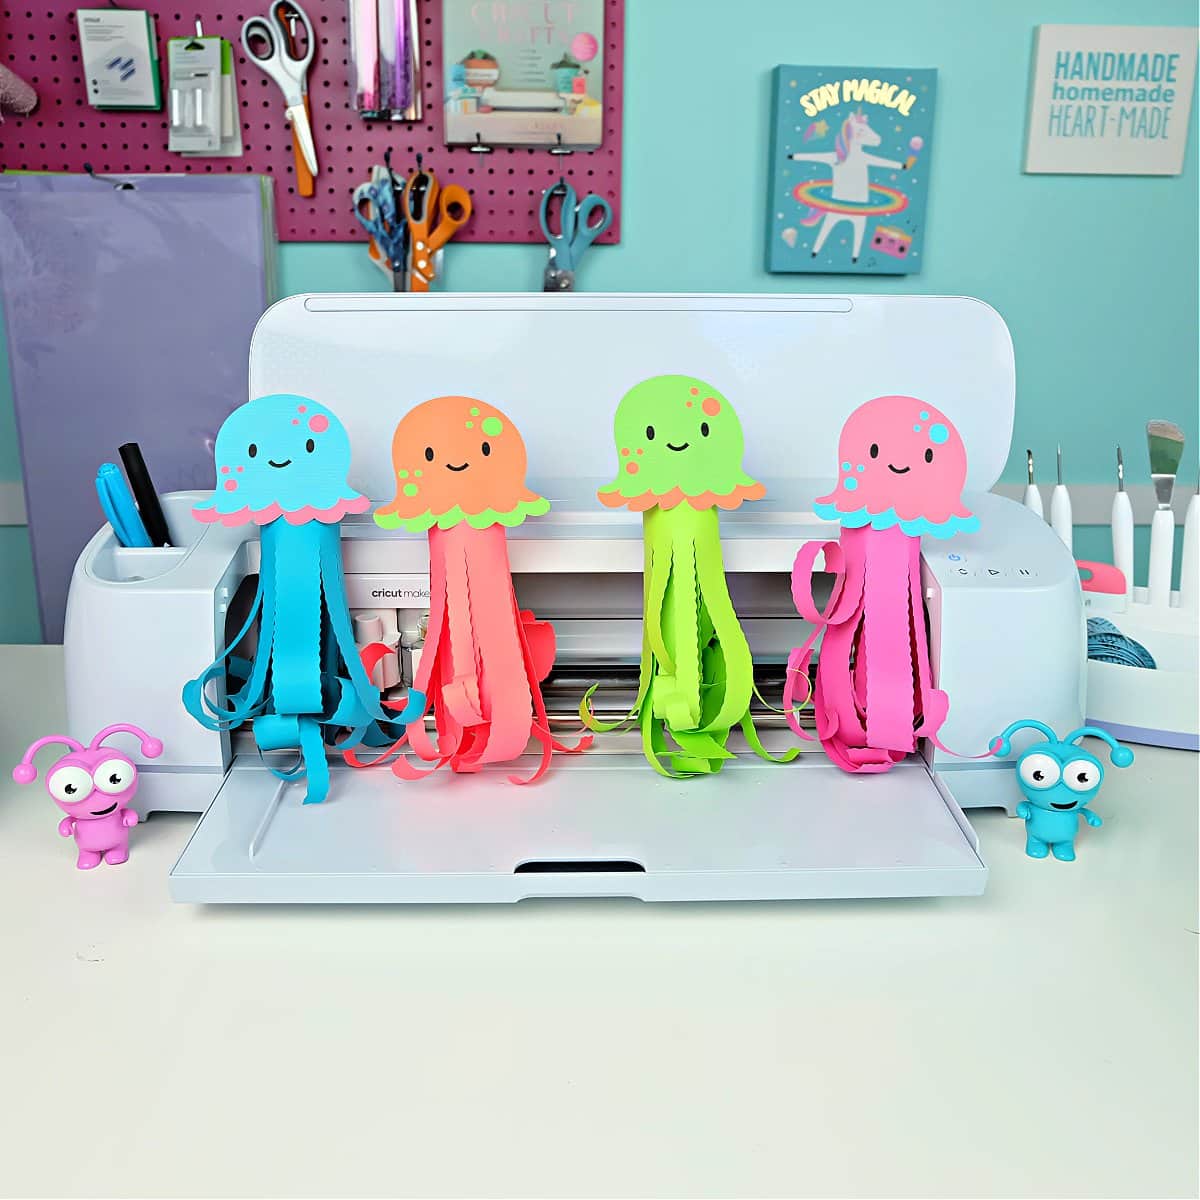 Create an adorable jumping jellyfish birthday garland using your Cricut cutting machine